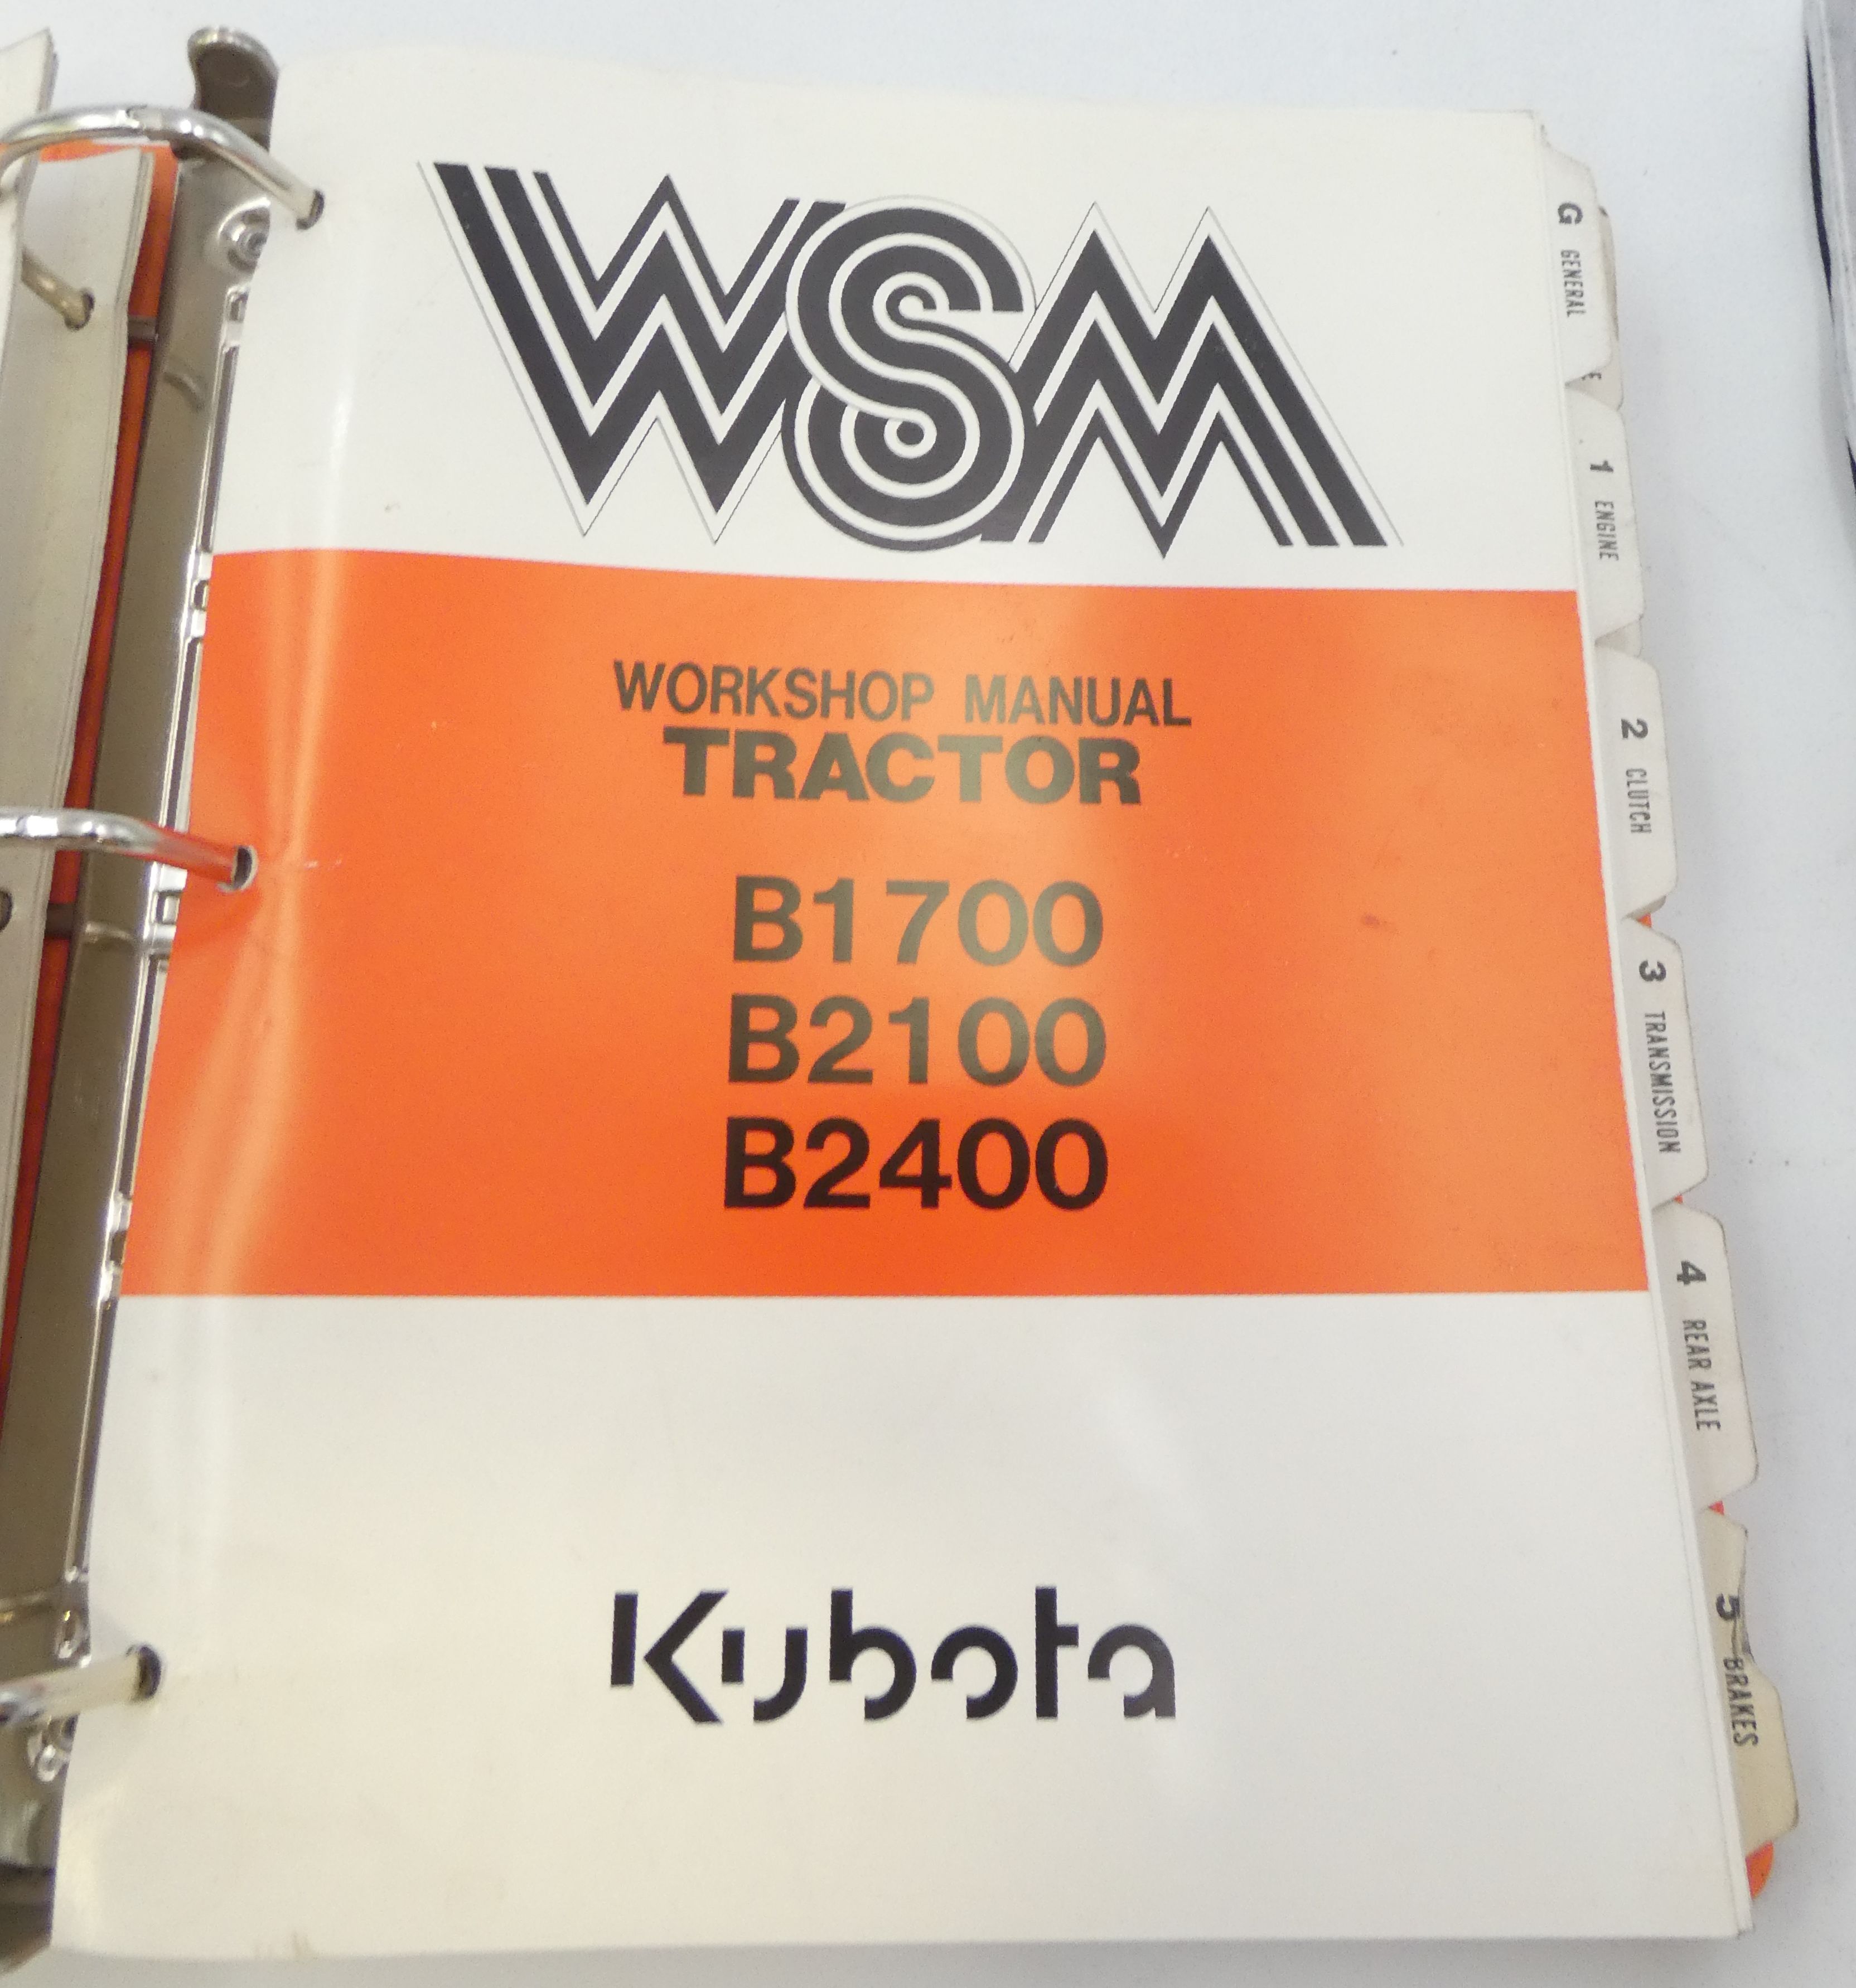 Kubota B1700, B2100, B2400 tractor workshop manual